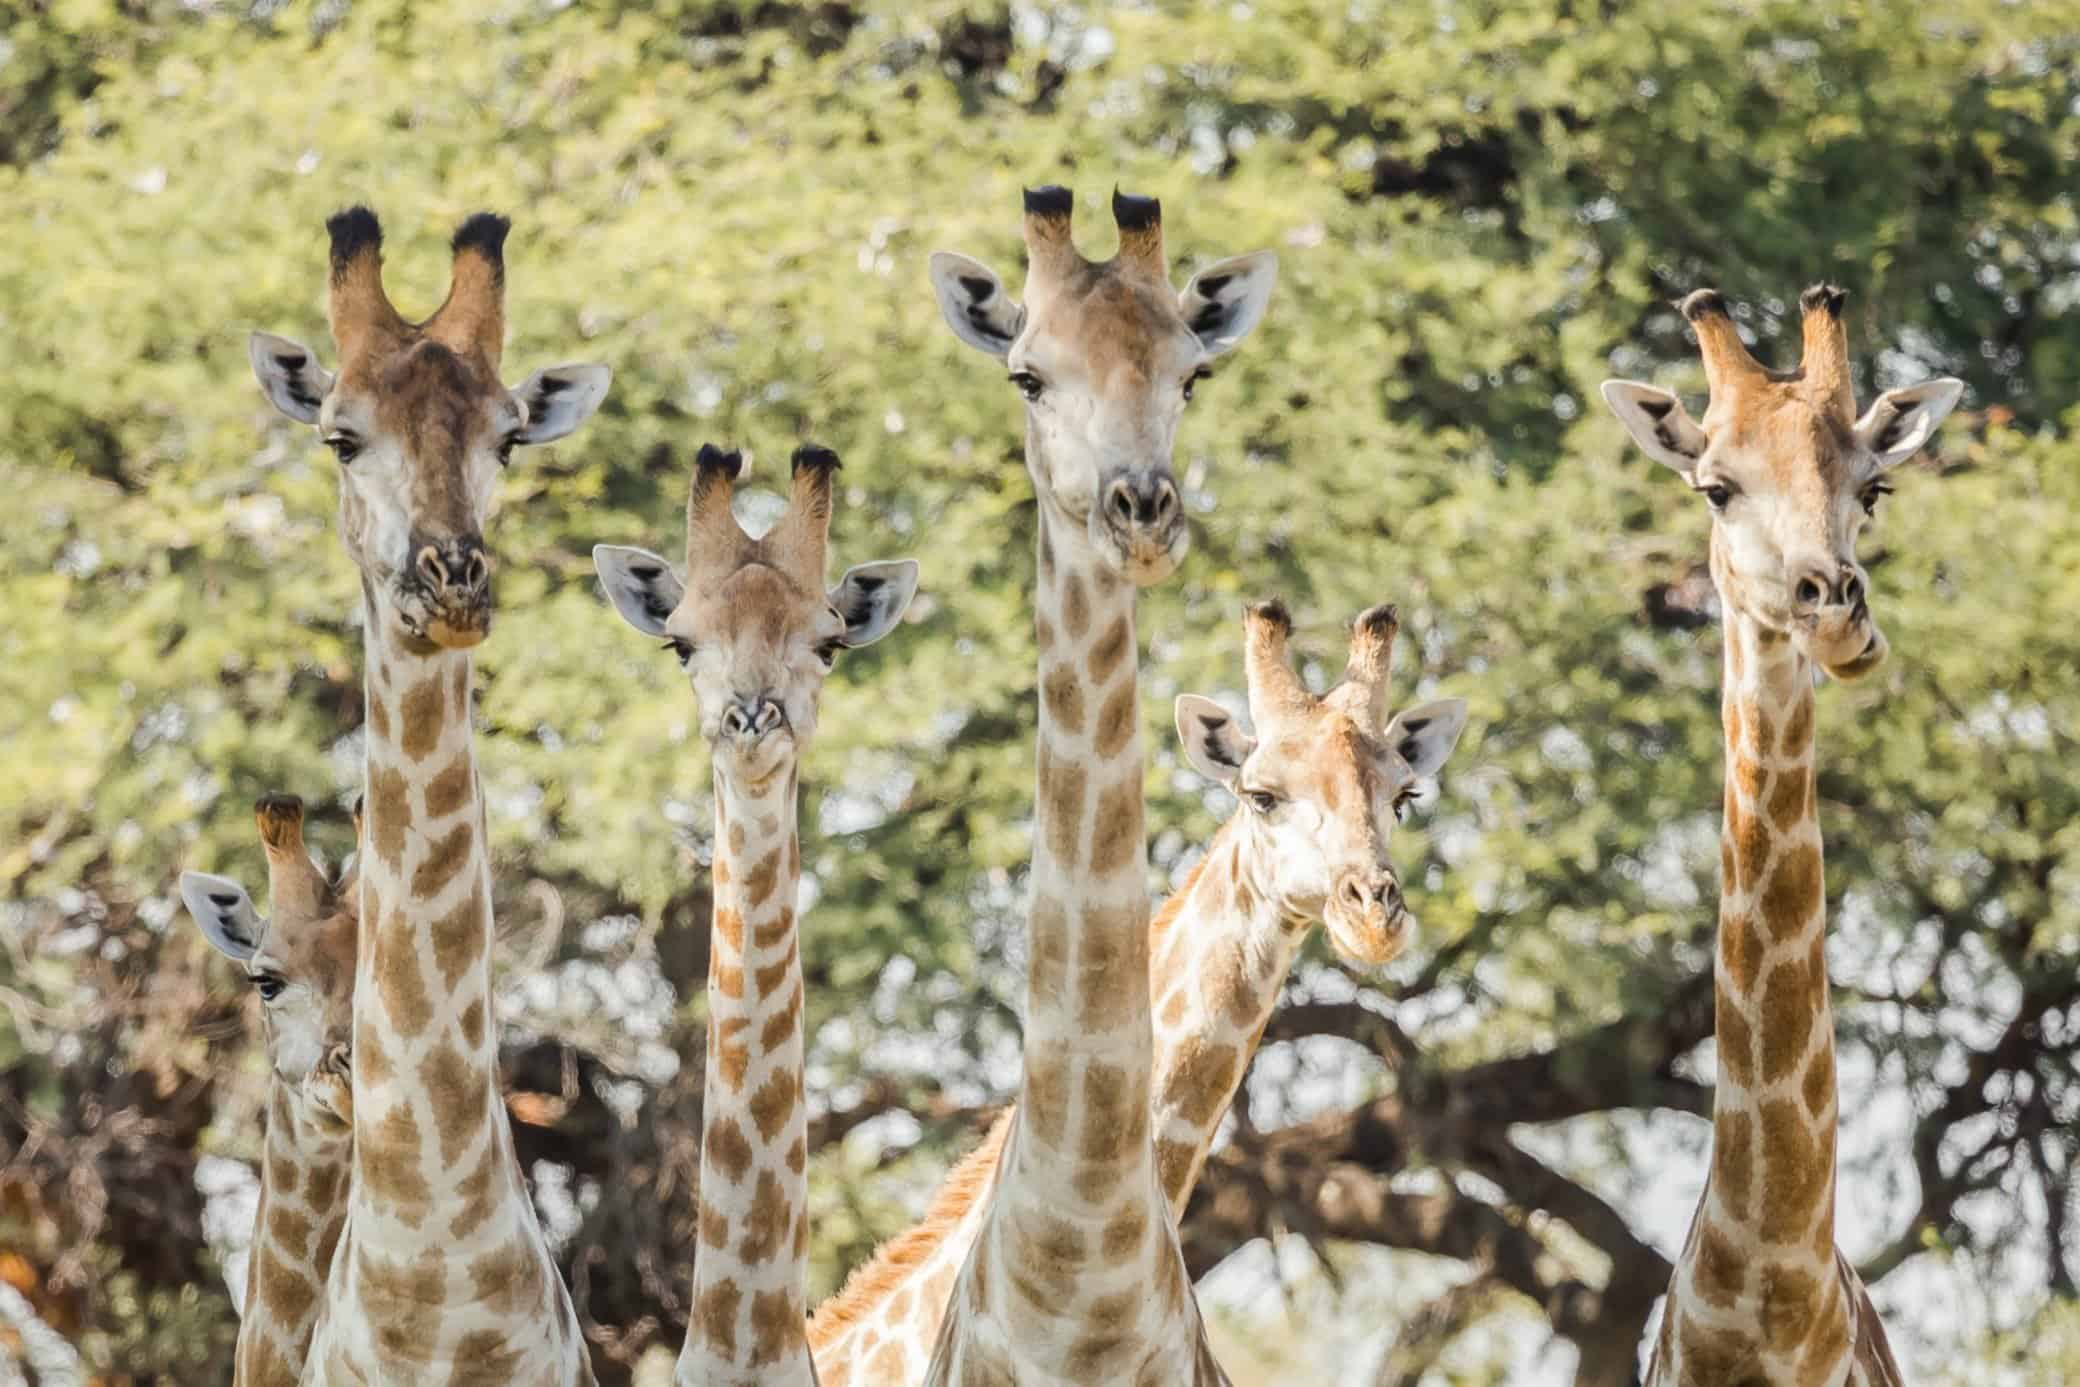 top 10 best safari in africa